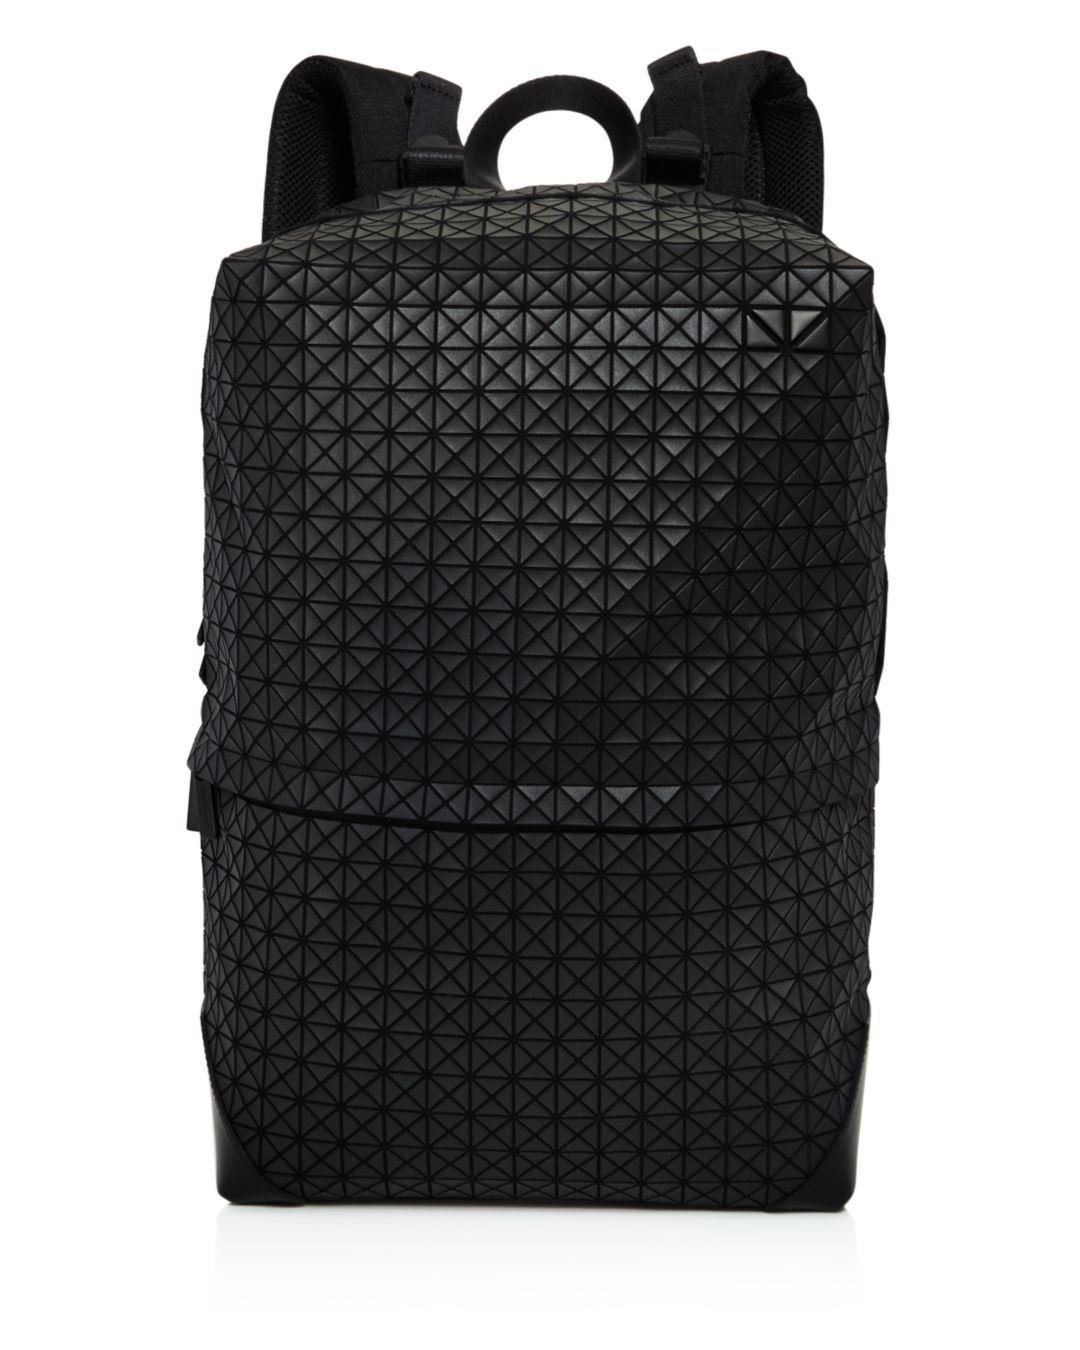 Bao Bao Issey Miyake Hiker Geometric Backpack in Black for Men - Lyst